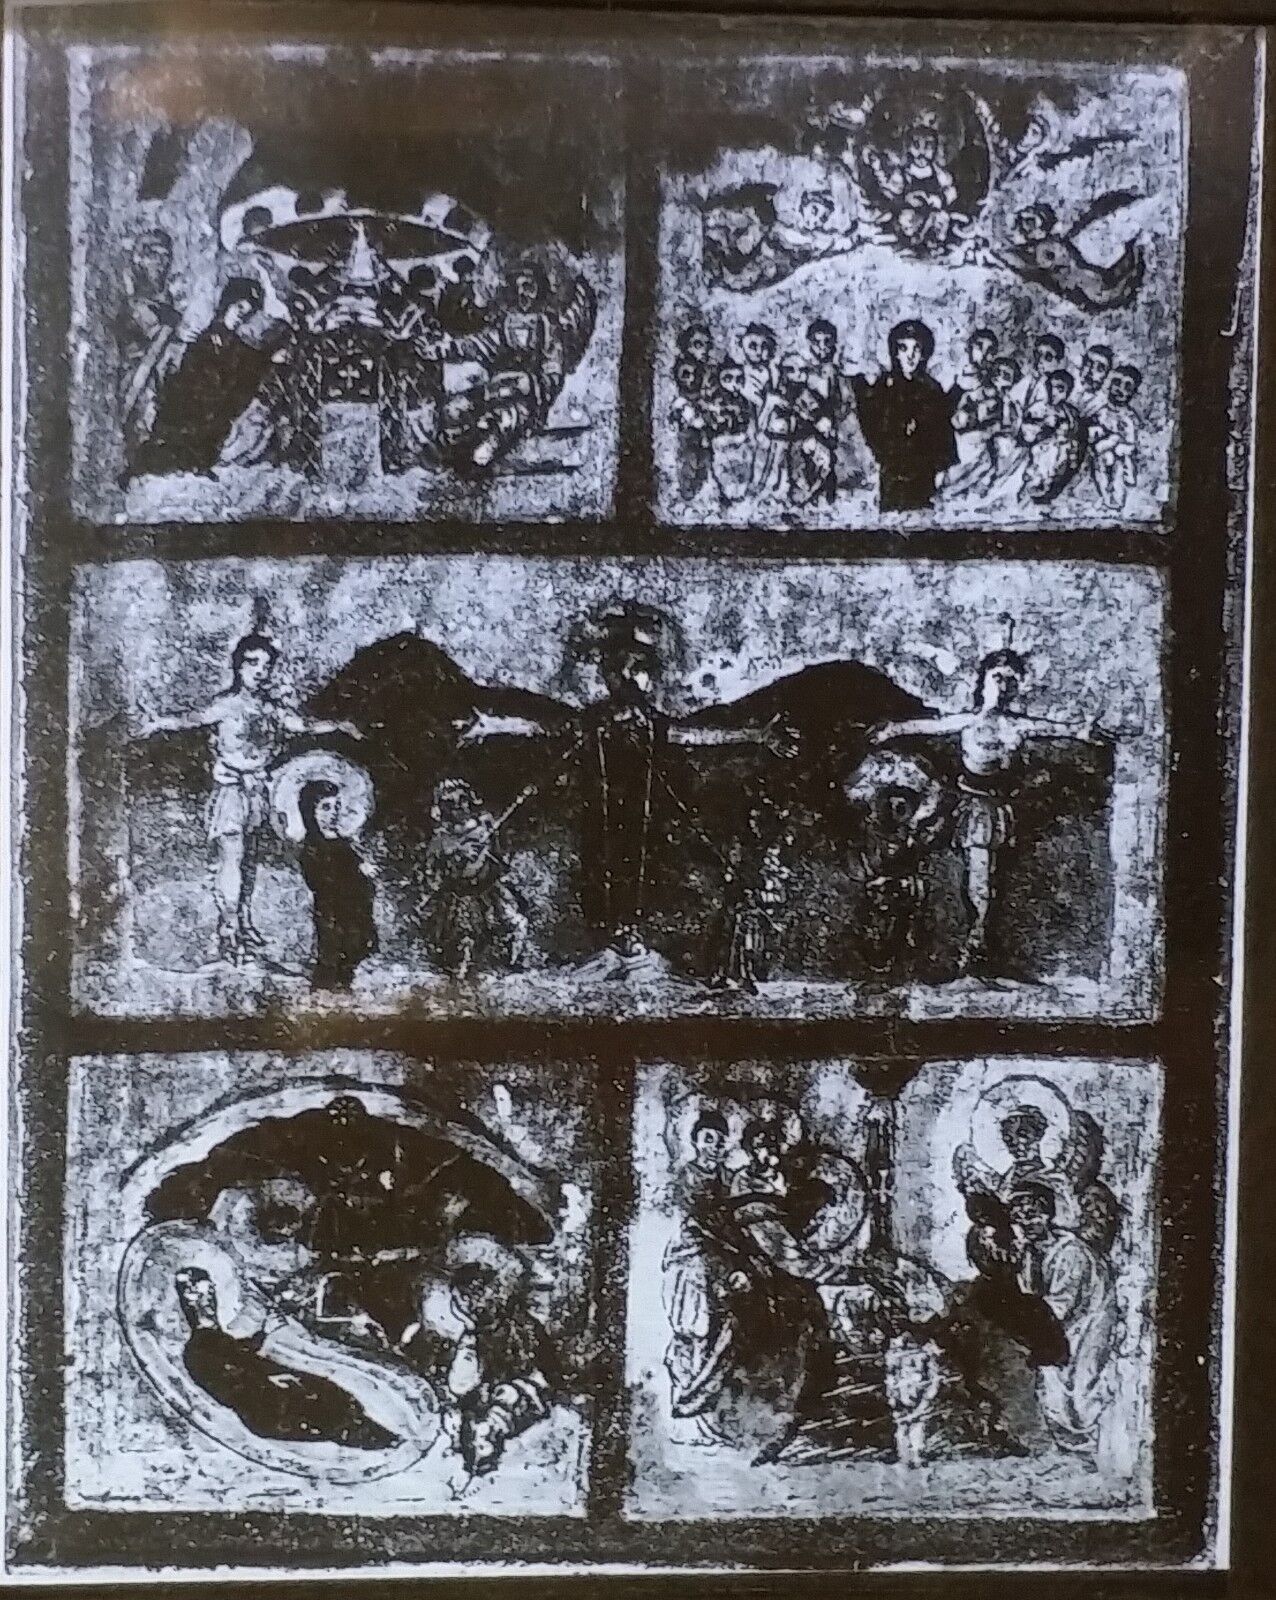 Scenes, Life of Christ, 6th c. Capella S. Sanctorum, Magic Lantern Glass Slide 